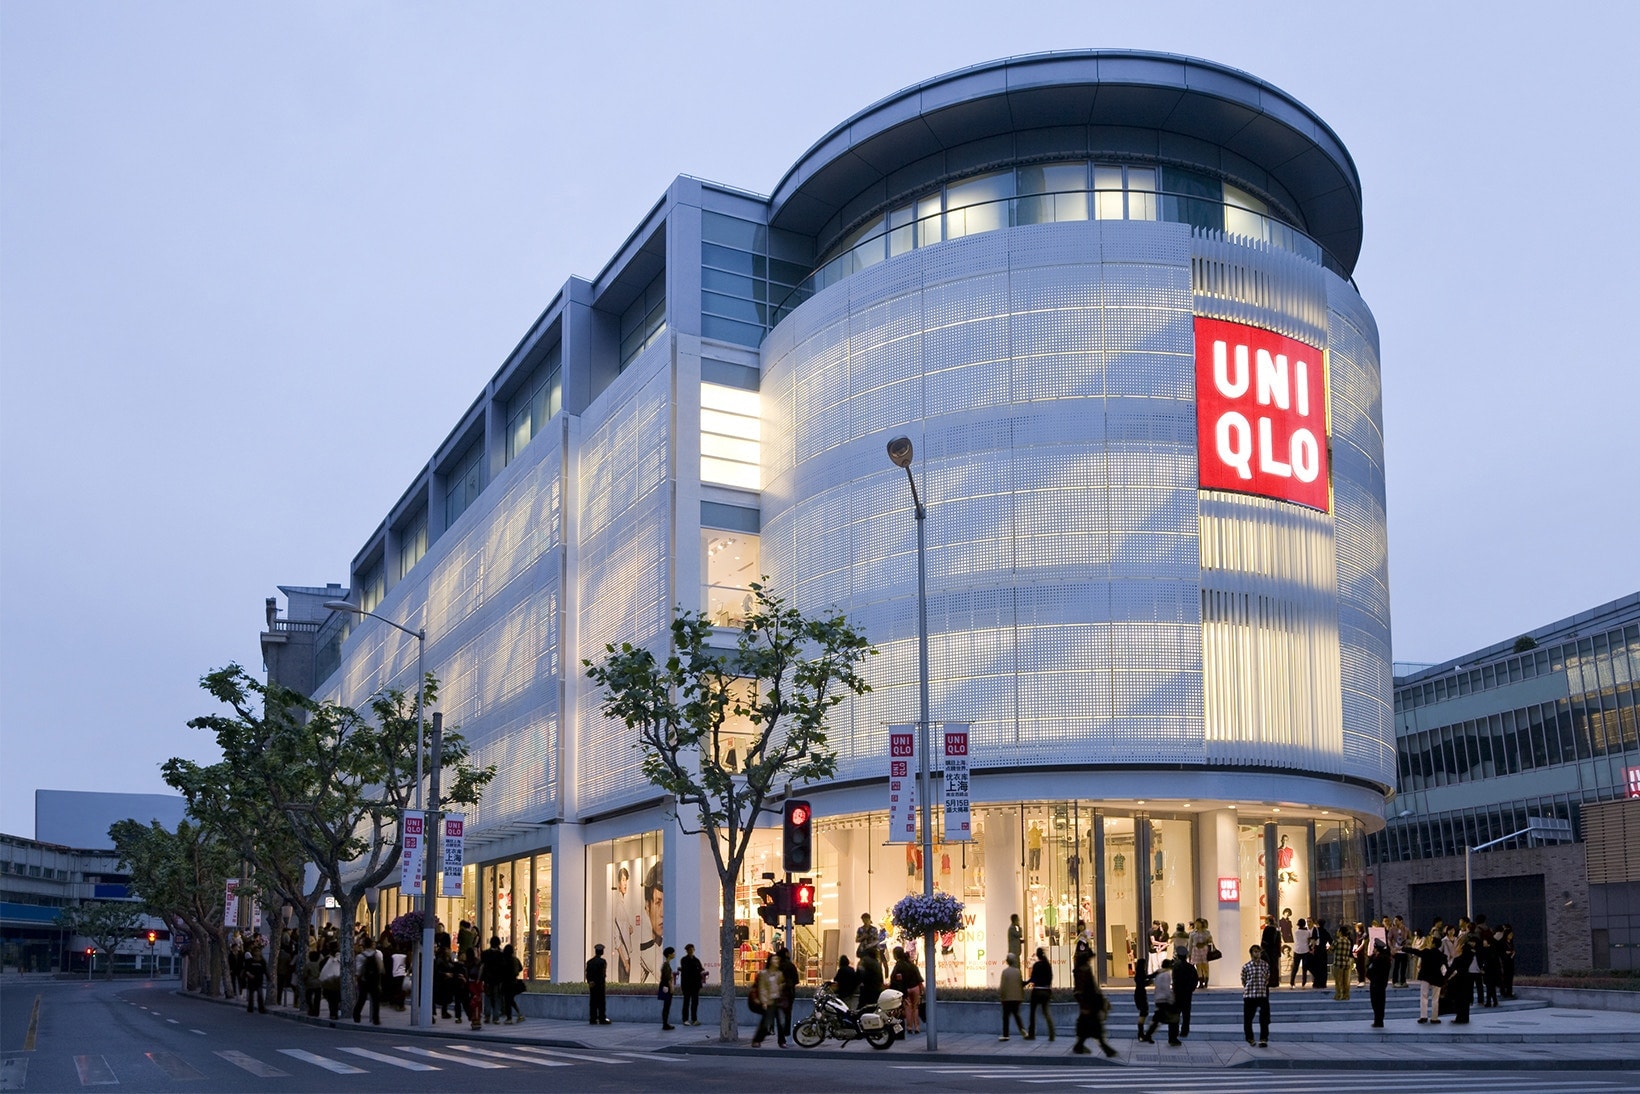 UNIQLO 計劃於 2021 年前在中國開設 1,000 家門店